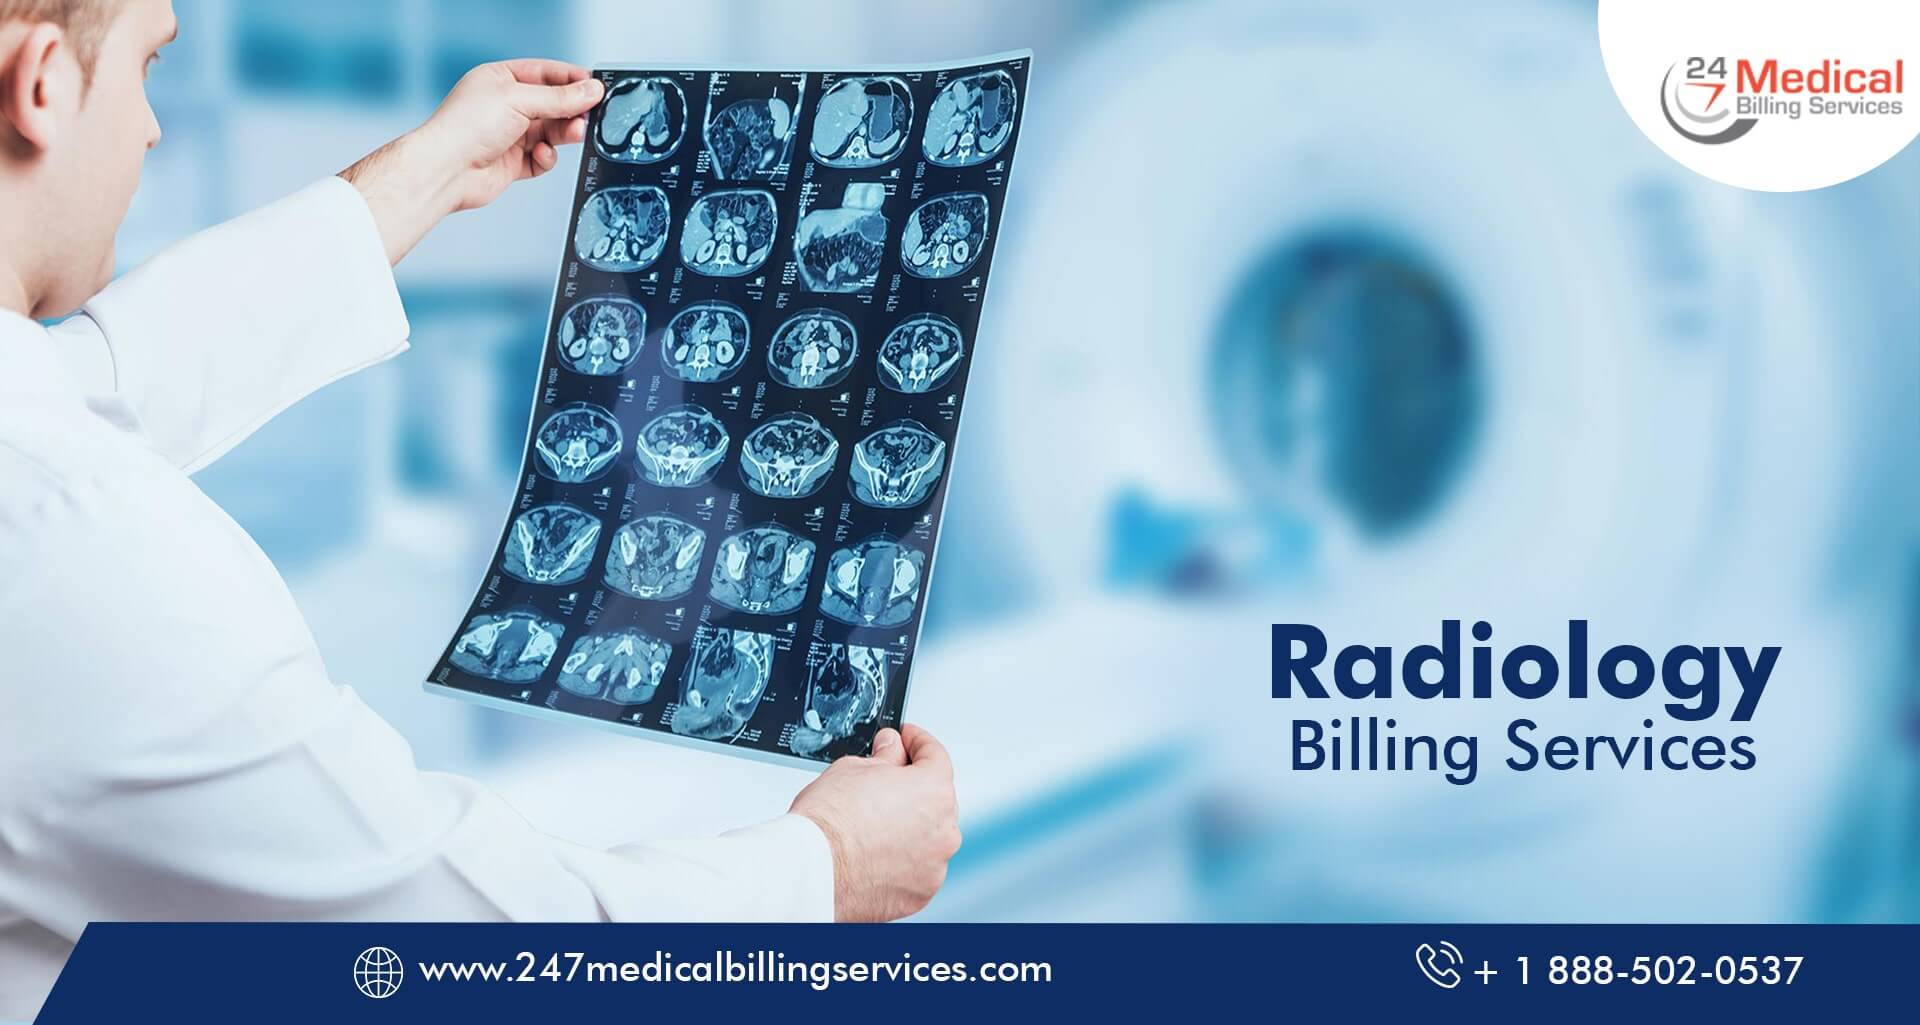  Radiology Billing Services in Dallas, Texas (TX)